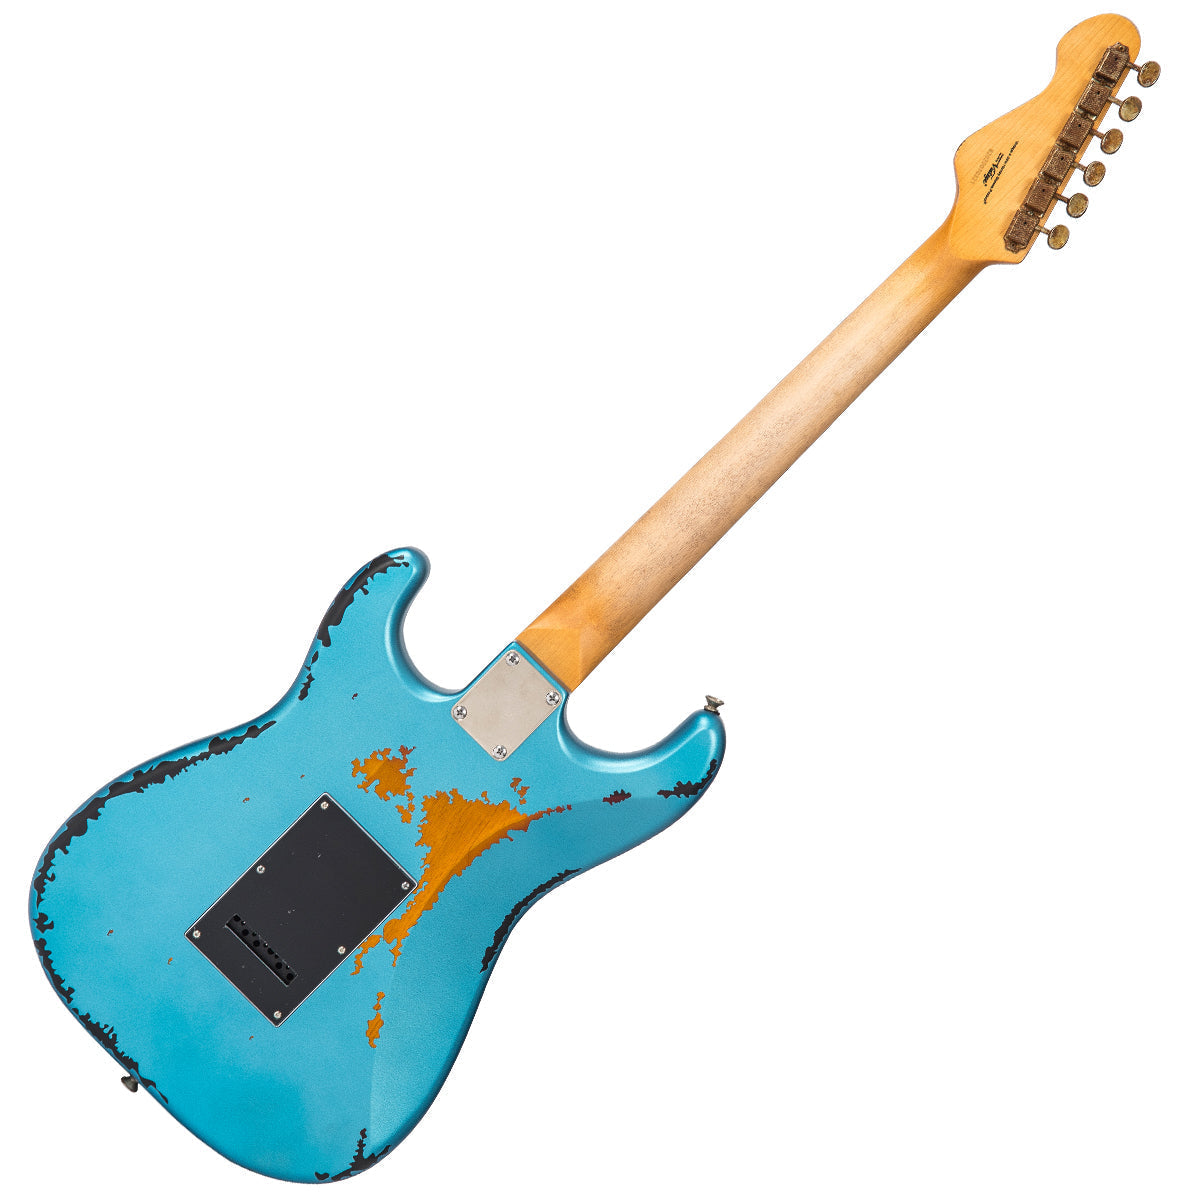 Vintage V6 ICON Electric Guitar ~ Distressed Gun Hill Blue Over Sunburst, Electric Guitar for sale at Richards Guitars.